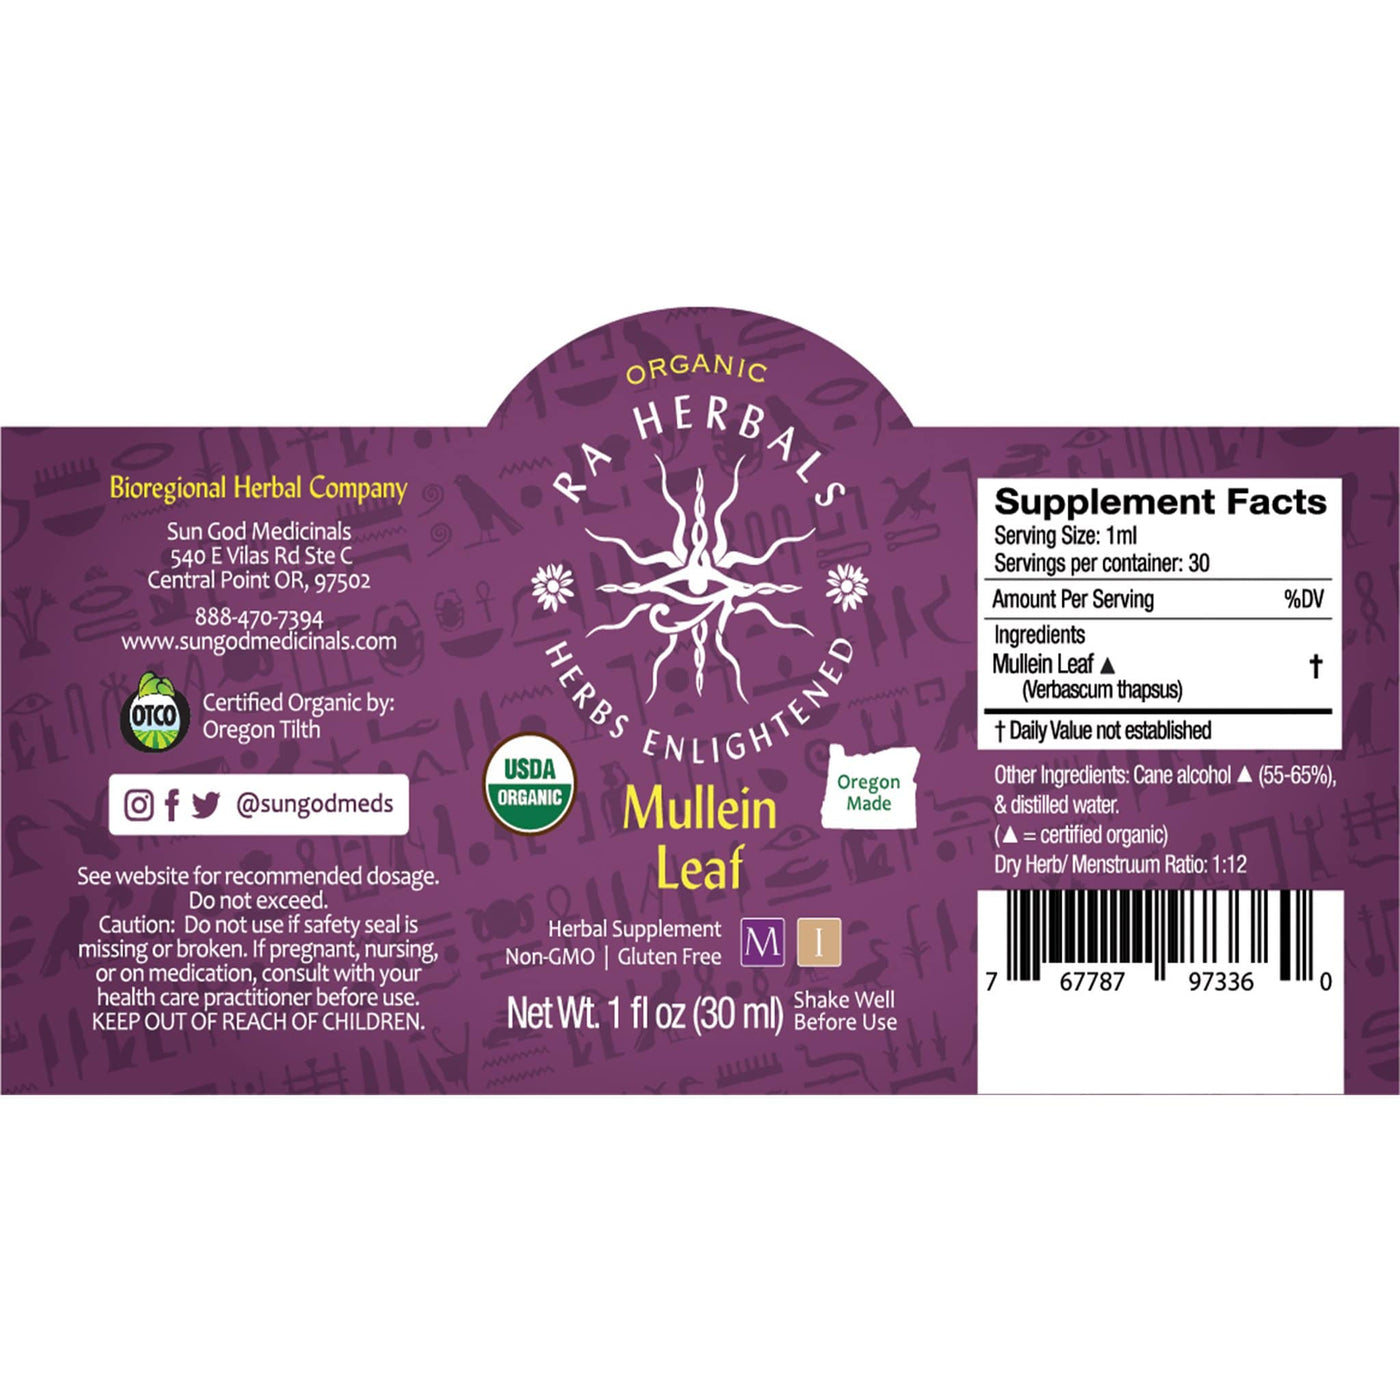 Ra Herbals Certified Organic Mullein Leaf Tincture - Sun God Medicinals